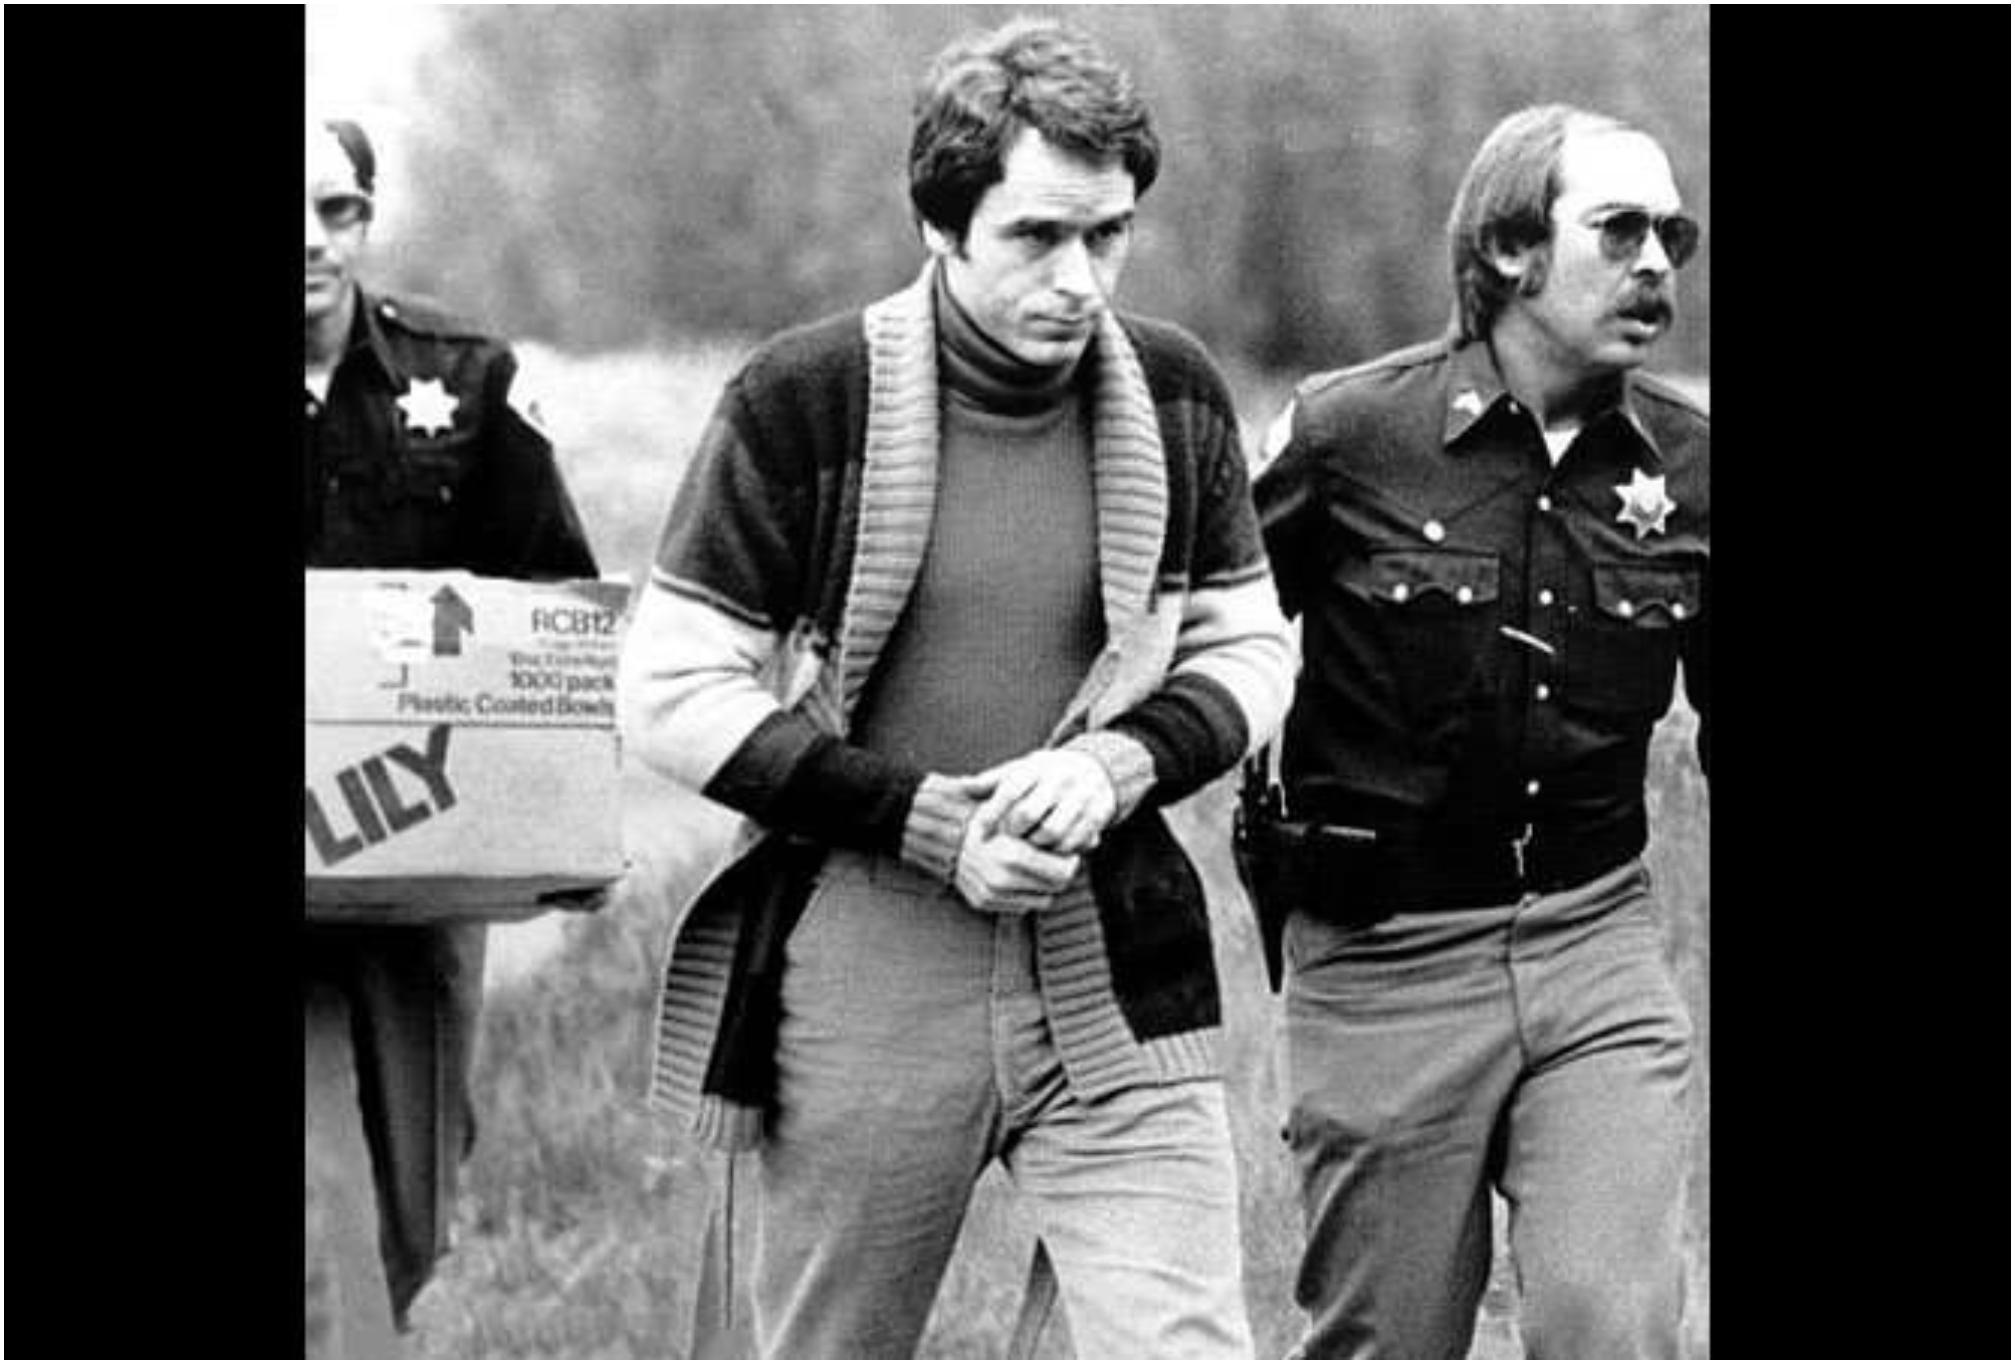 Ted Bundy: O γοητευτικός serial killer που ερωτεύονταν οι γυναίκες – Η ιστορία ενός ευφυούς ανθρώπου που σκότωσε δεκάδες κοπέλες πριν εκτελεστεί και κράτησαν τον εγκέφαλο του για πειράματα